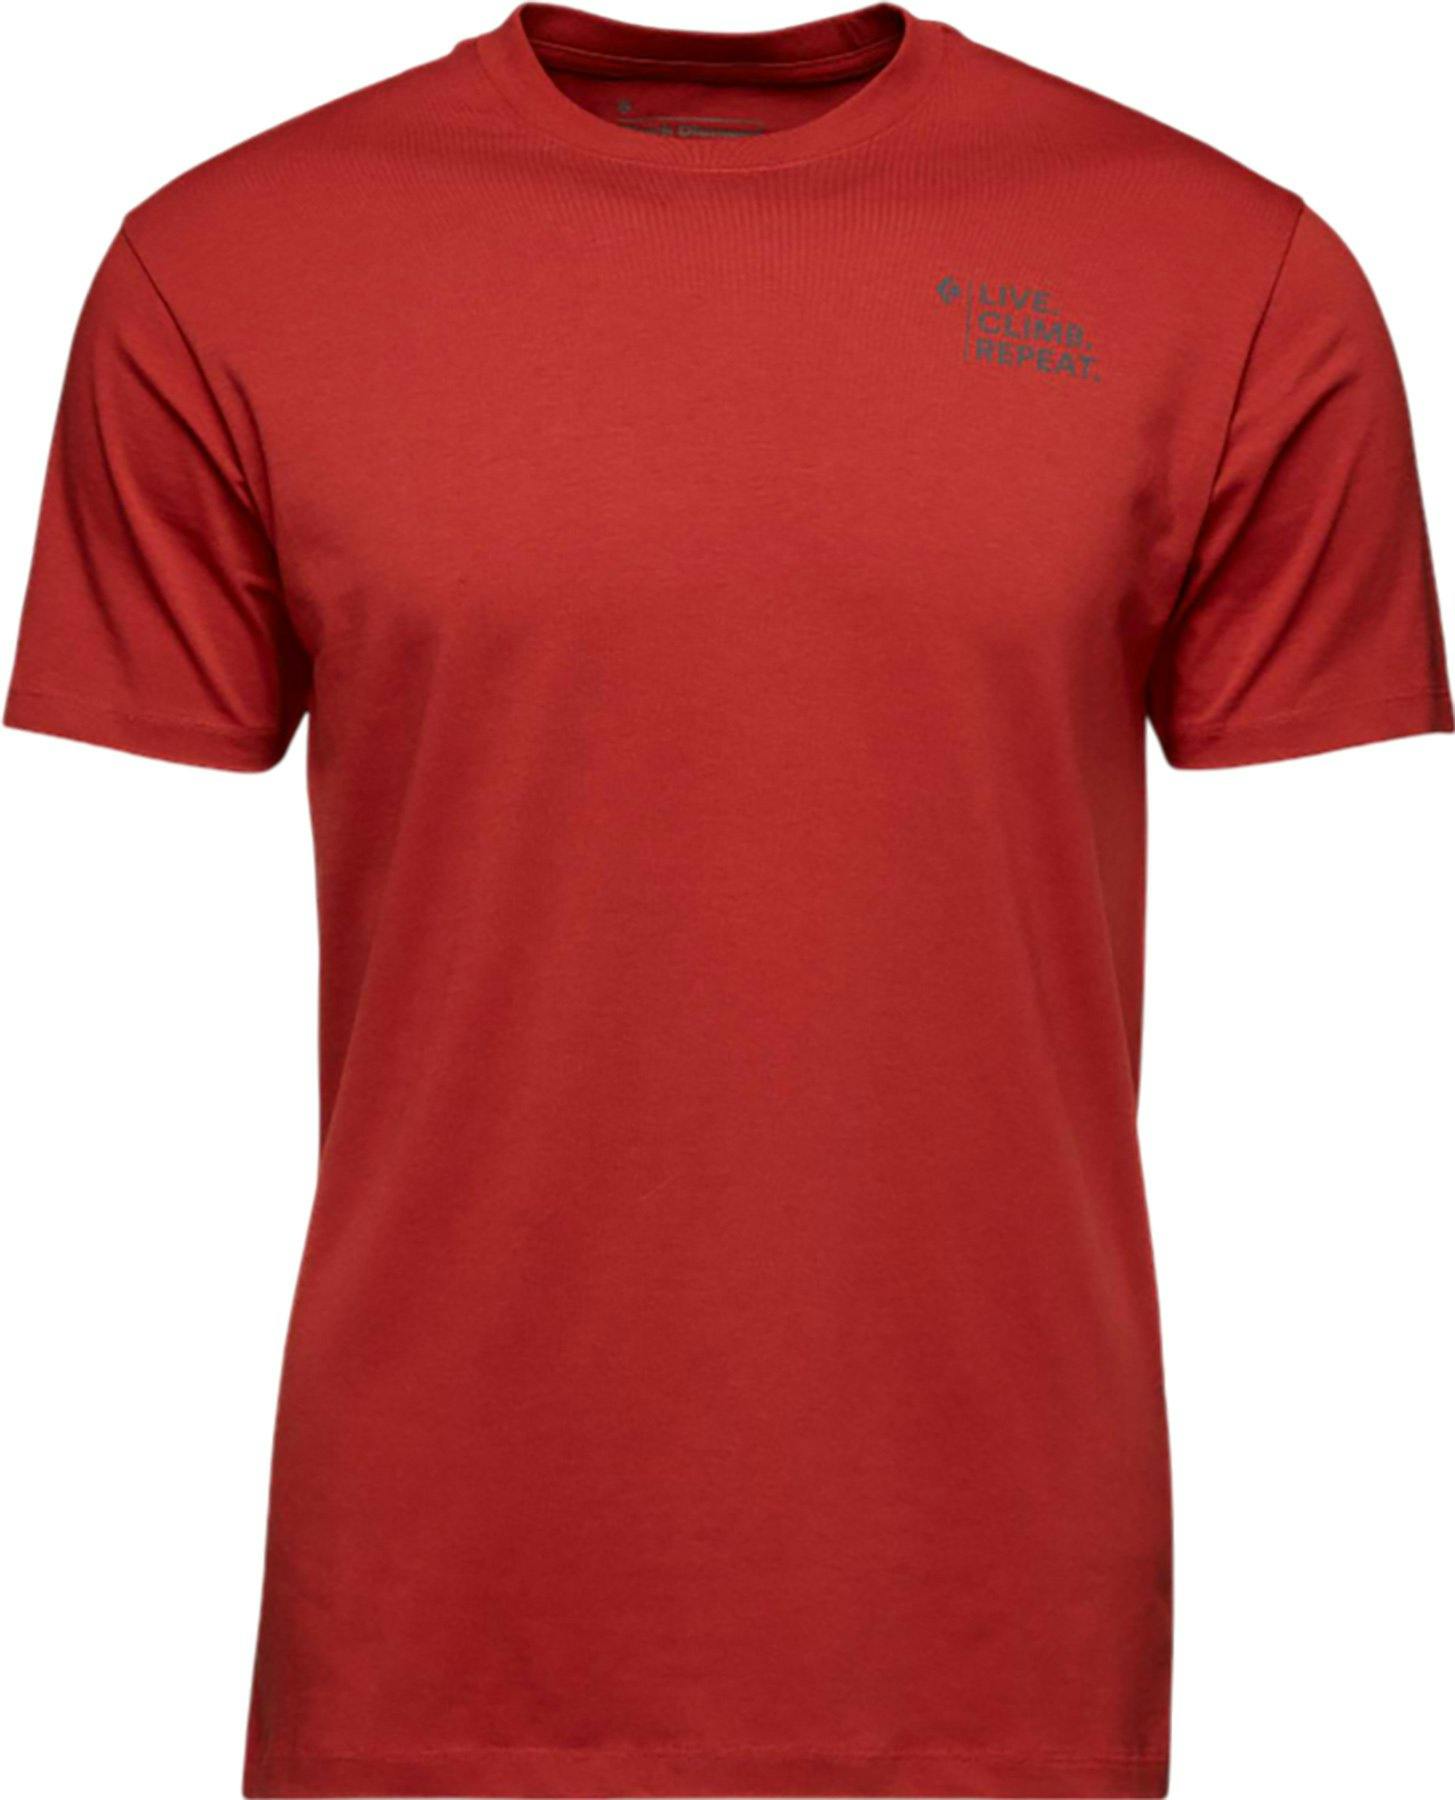 Product image for Desert To Mountain T-Shirt - Men's